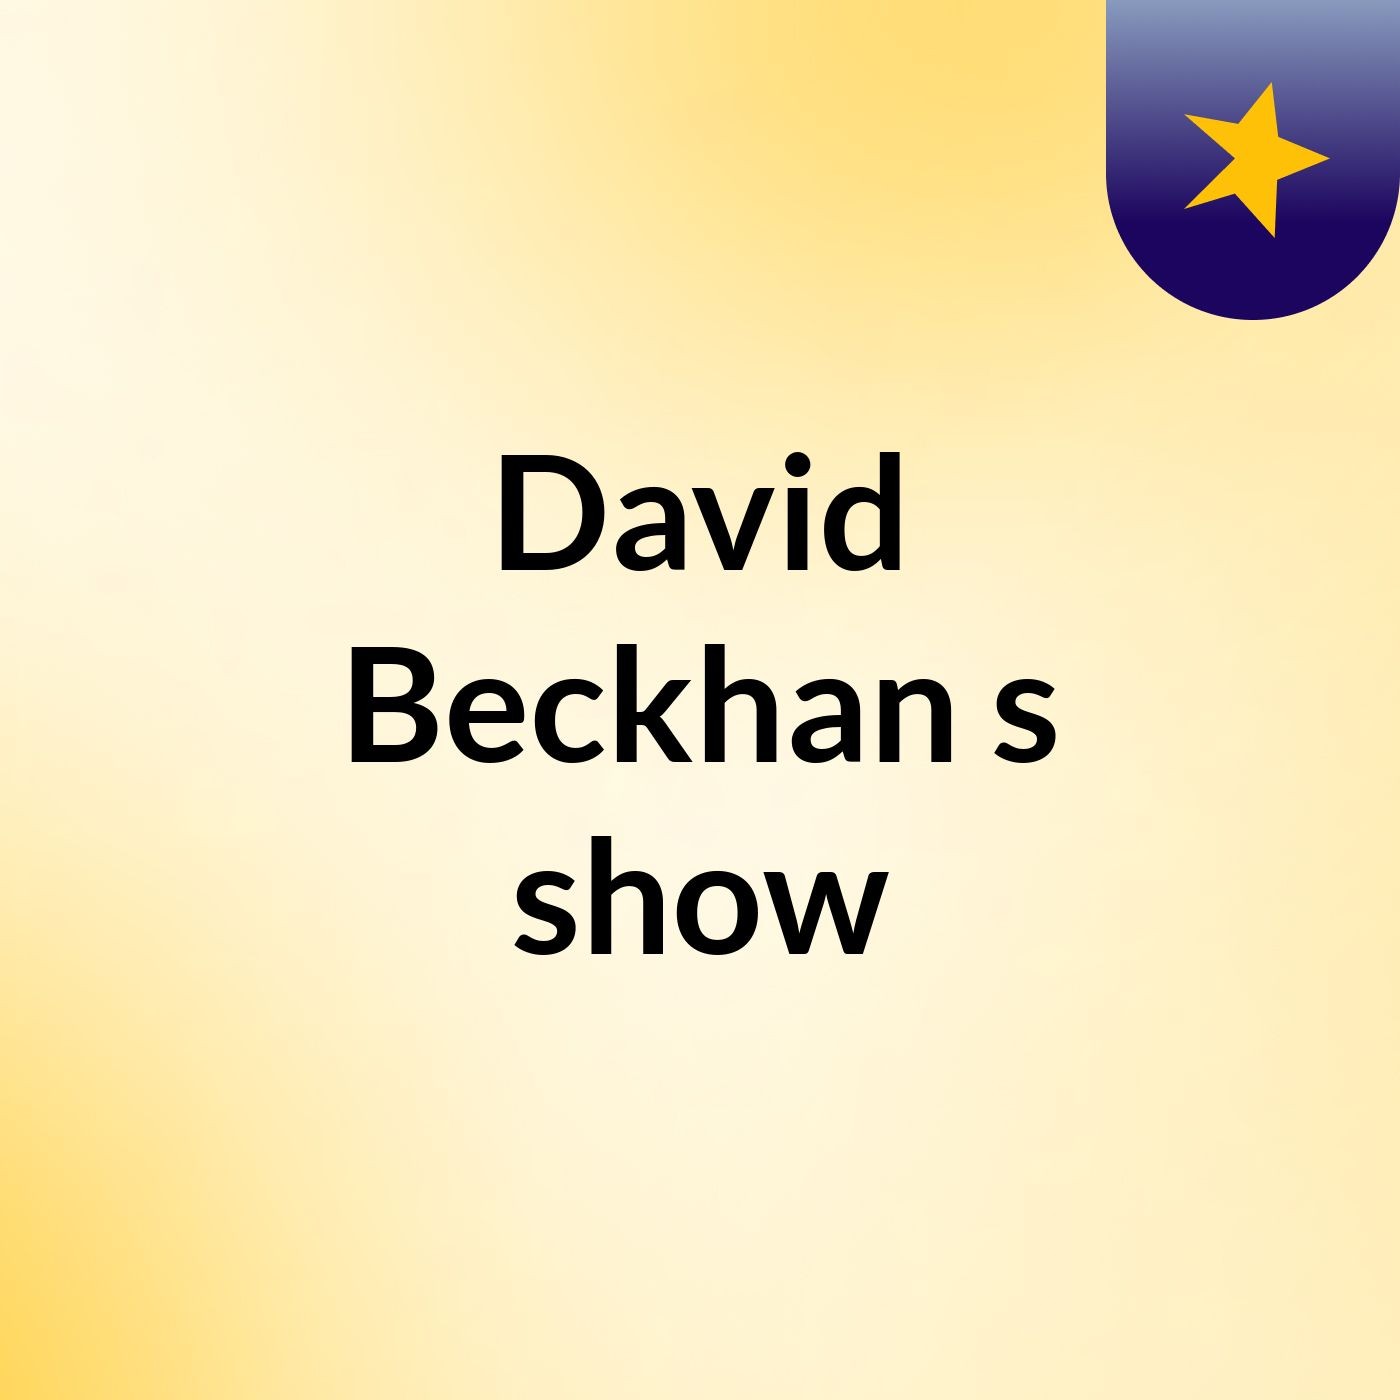 David Beckhan's show